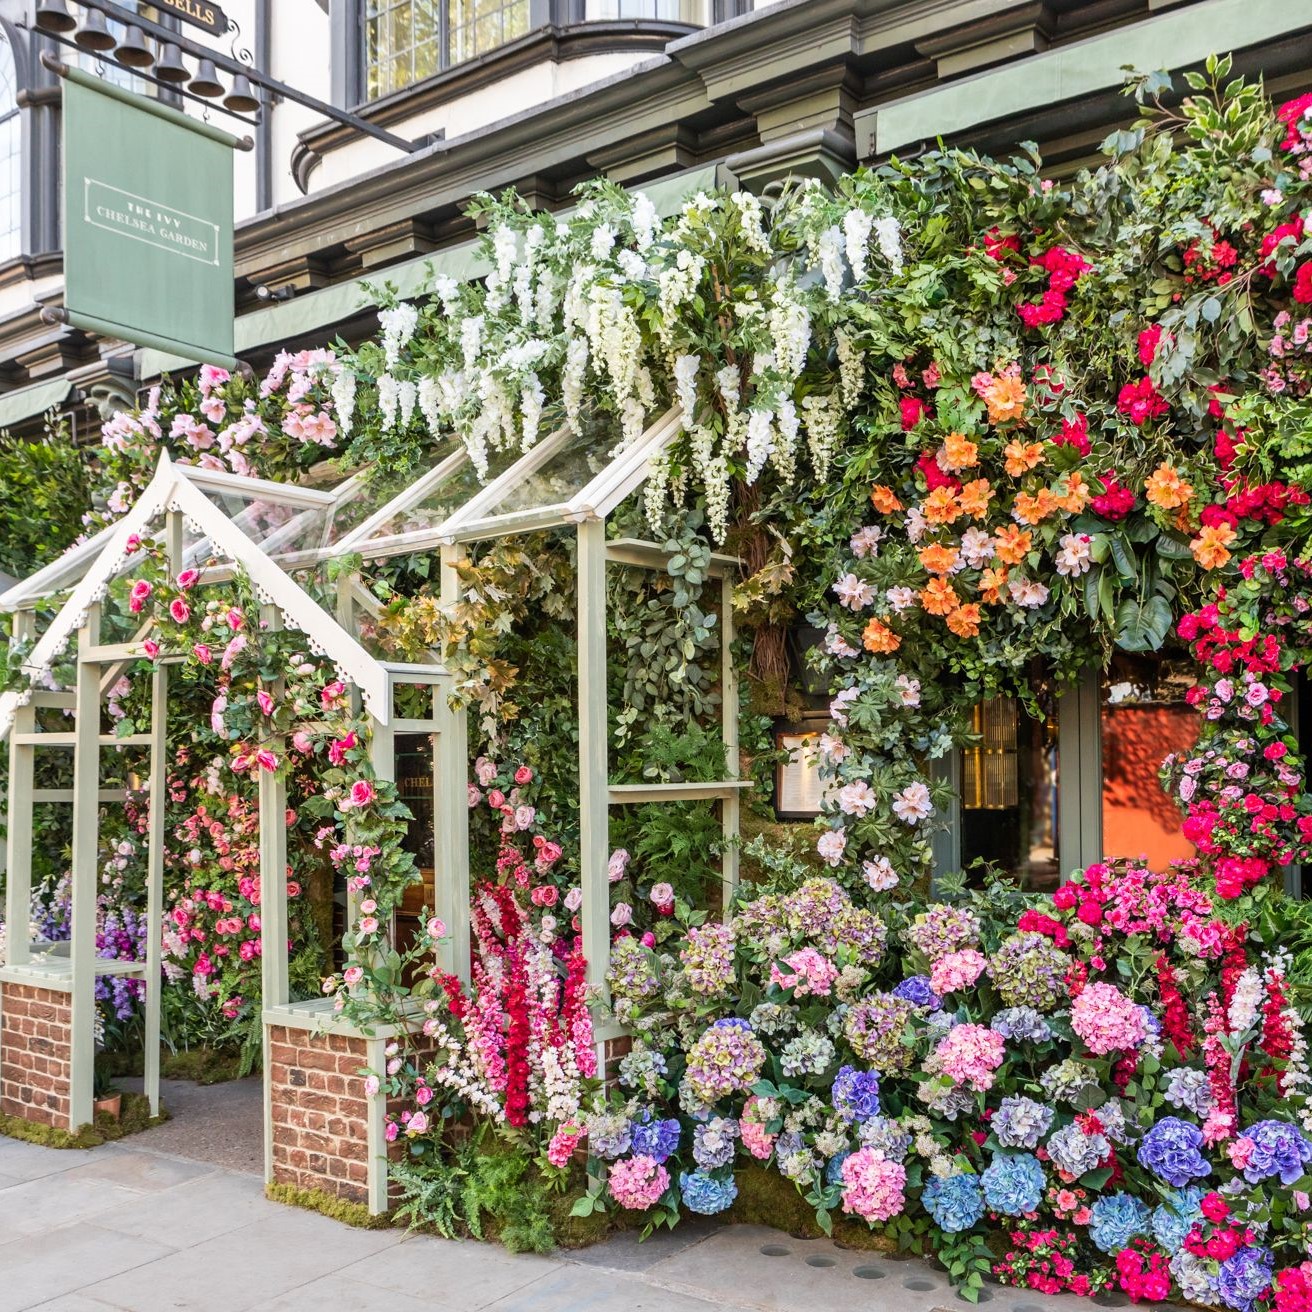 The Ivy Chelsea garden has a new luxury garden area